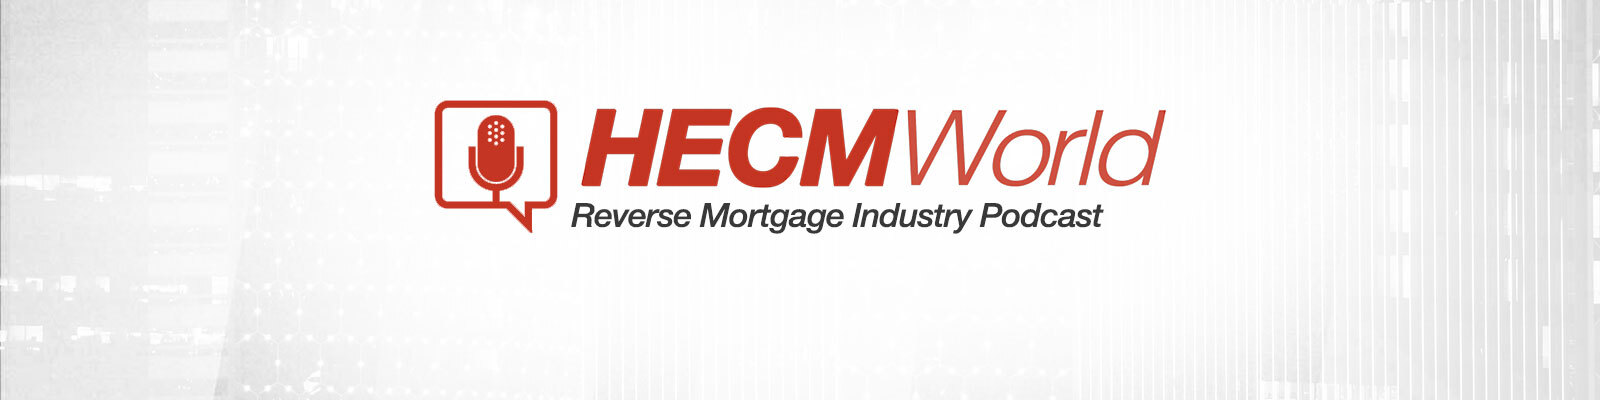 Reverse Mortgage News by HECMWorld